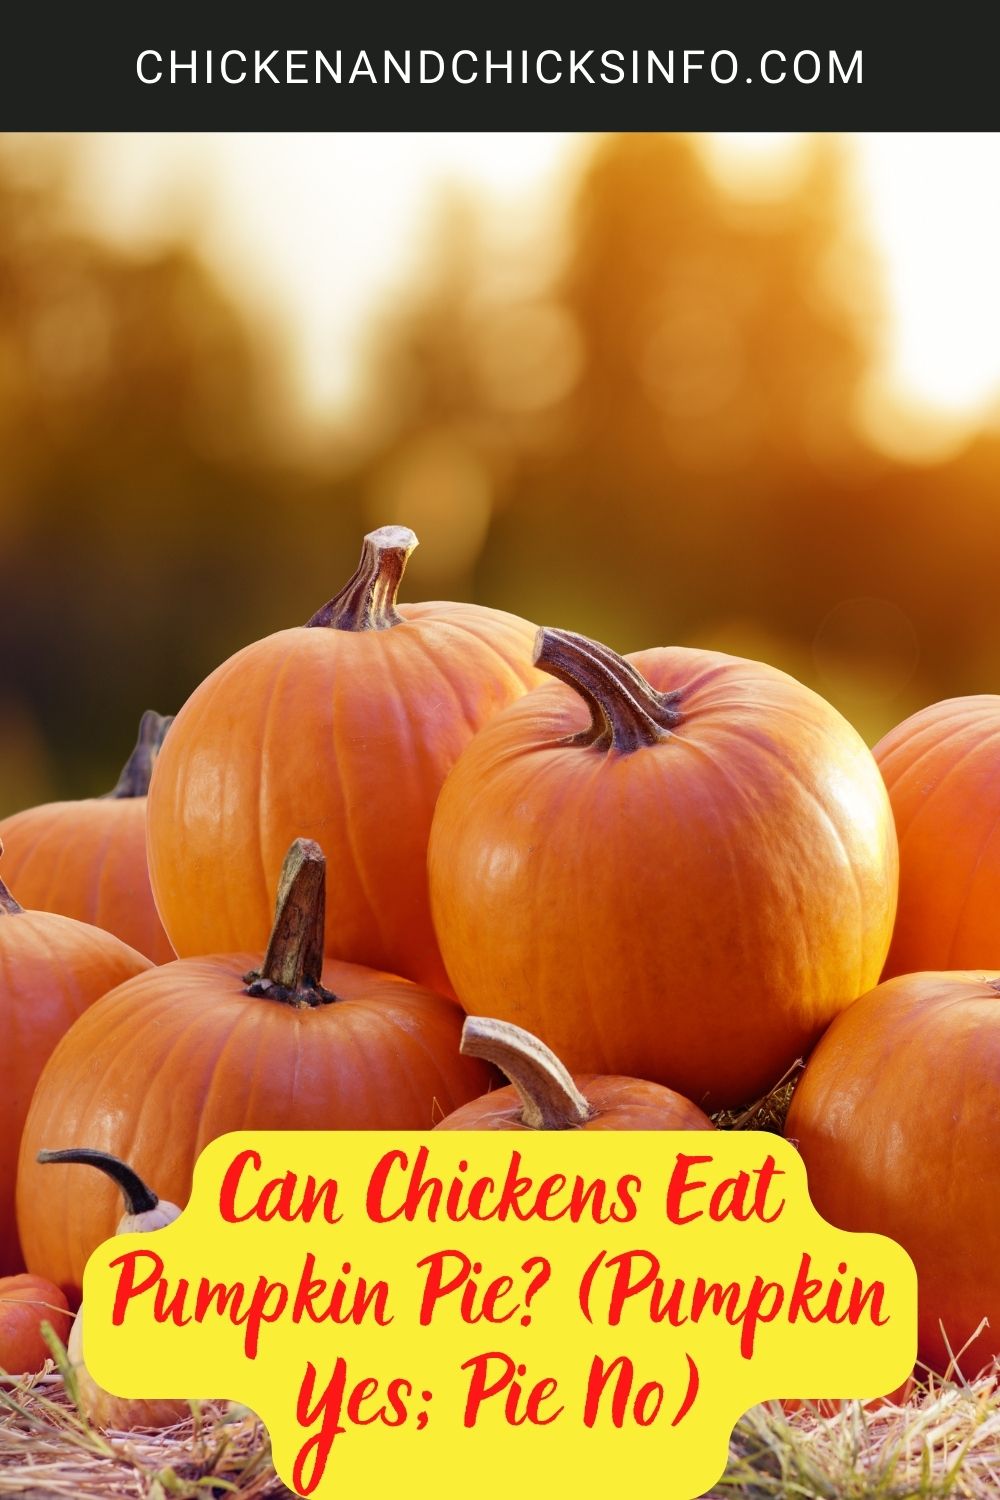 Can Chickens Eat Pumpkin Pie (Pumpkin Yes; Pie No) poster.
